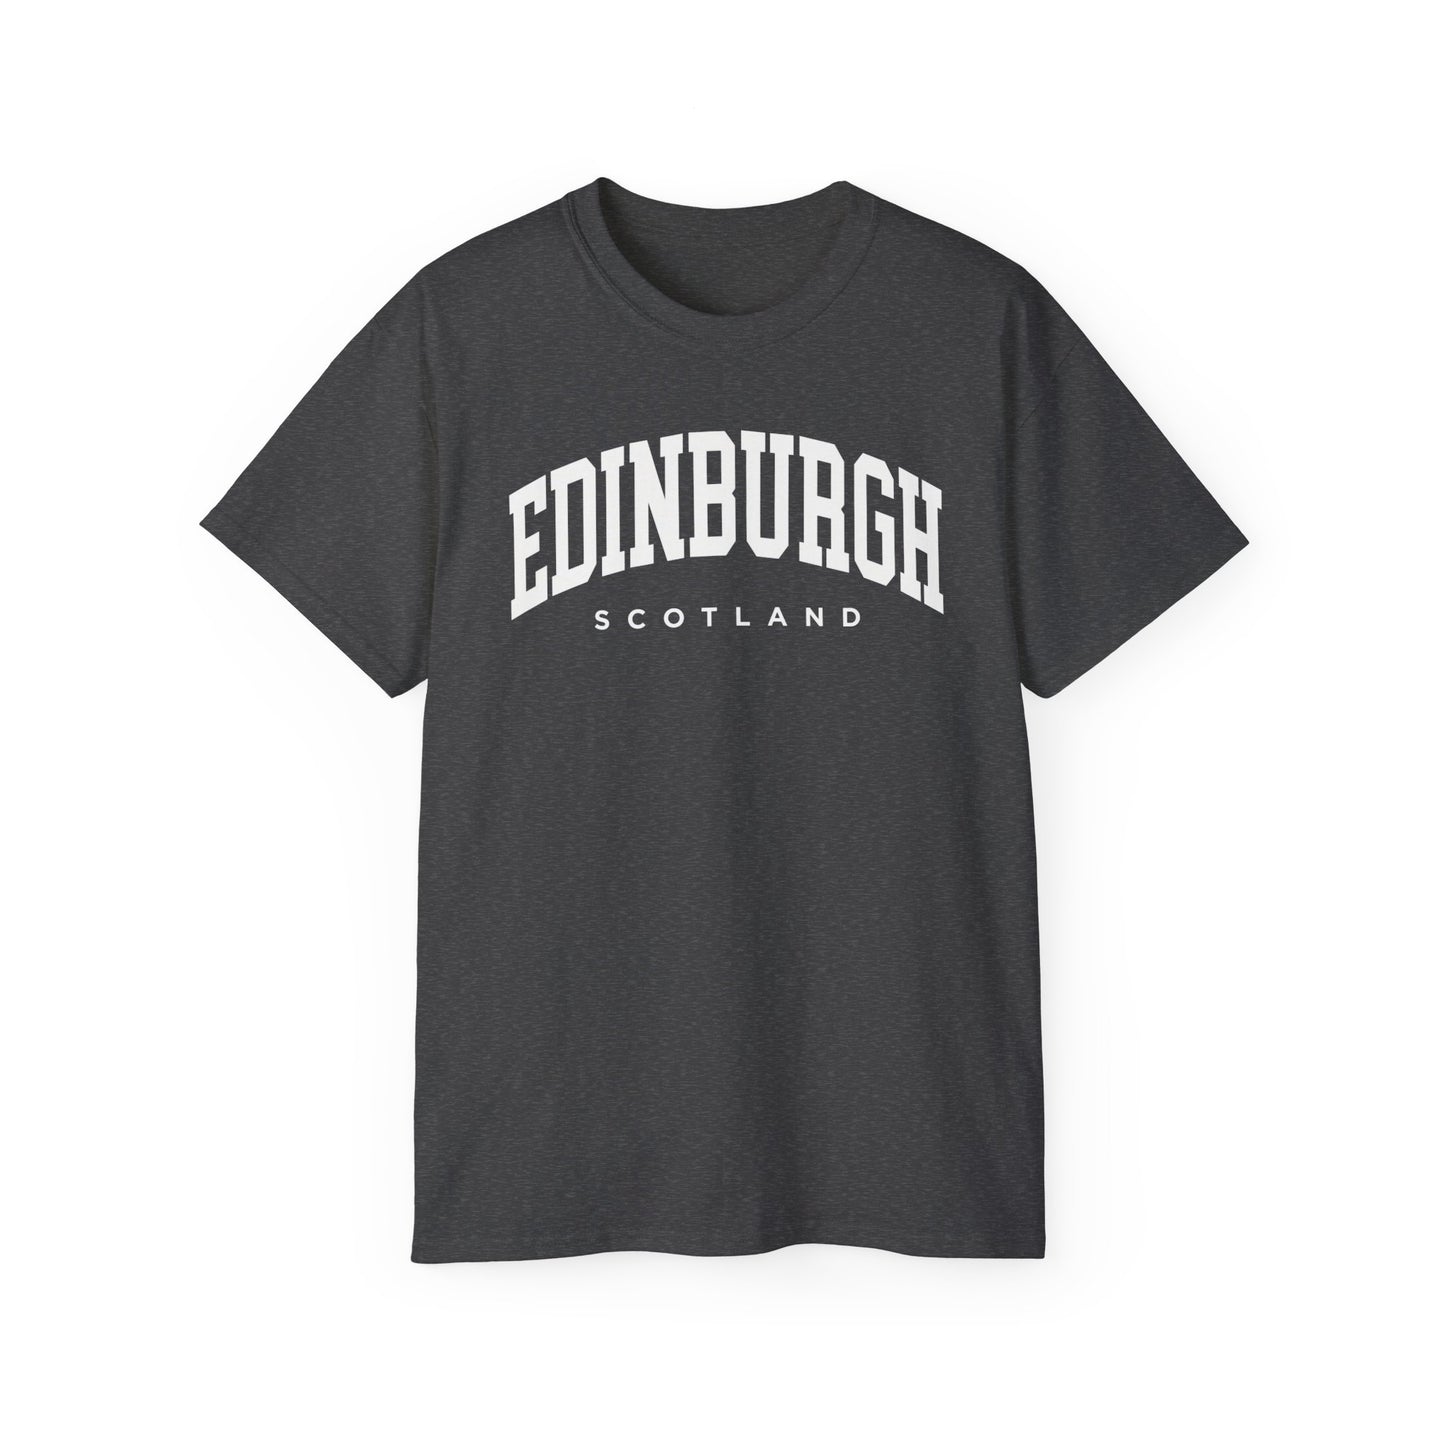 Edinburgh Scotland Tee